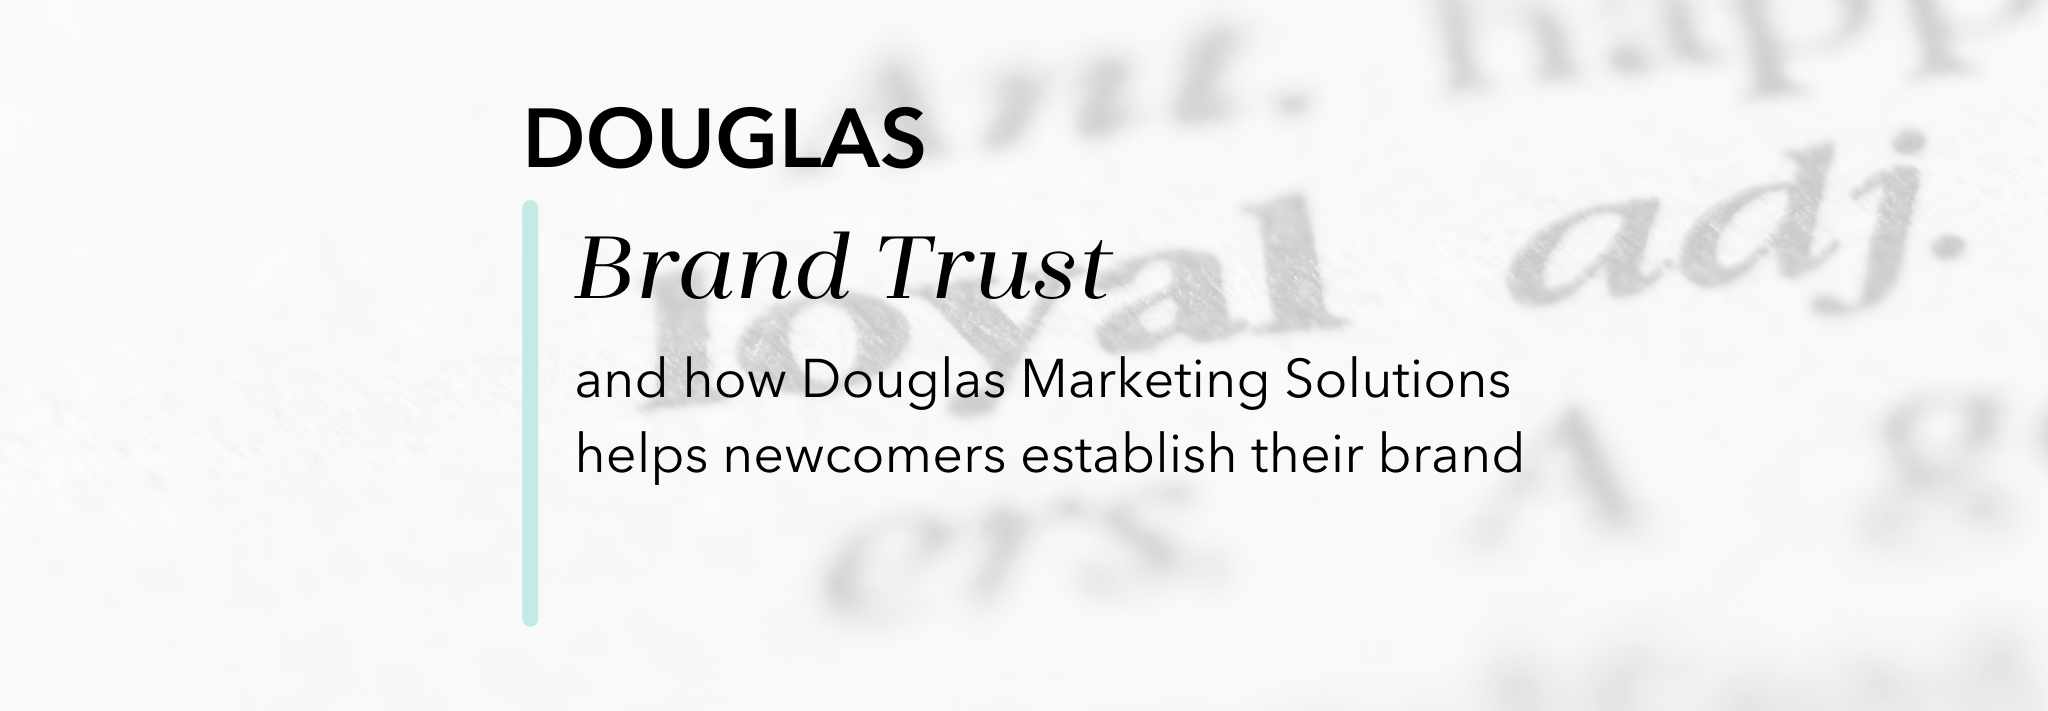 Douglas Brand Trust